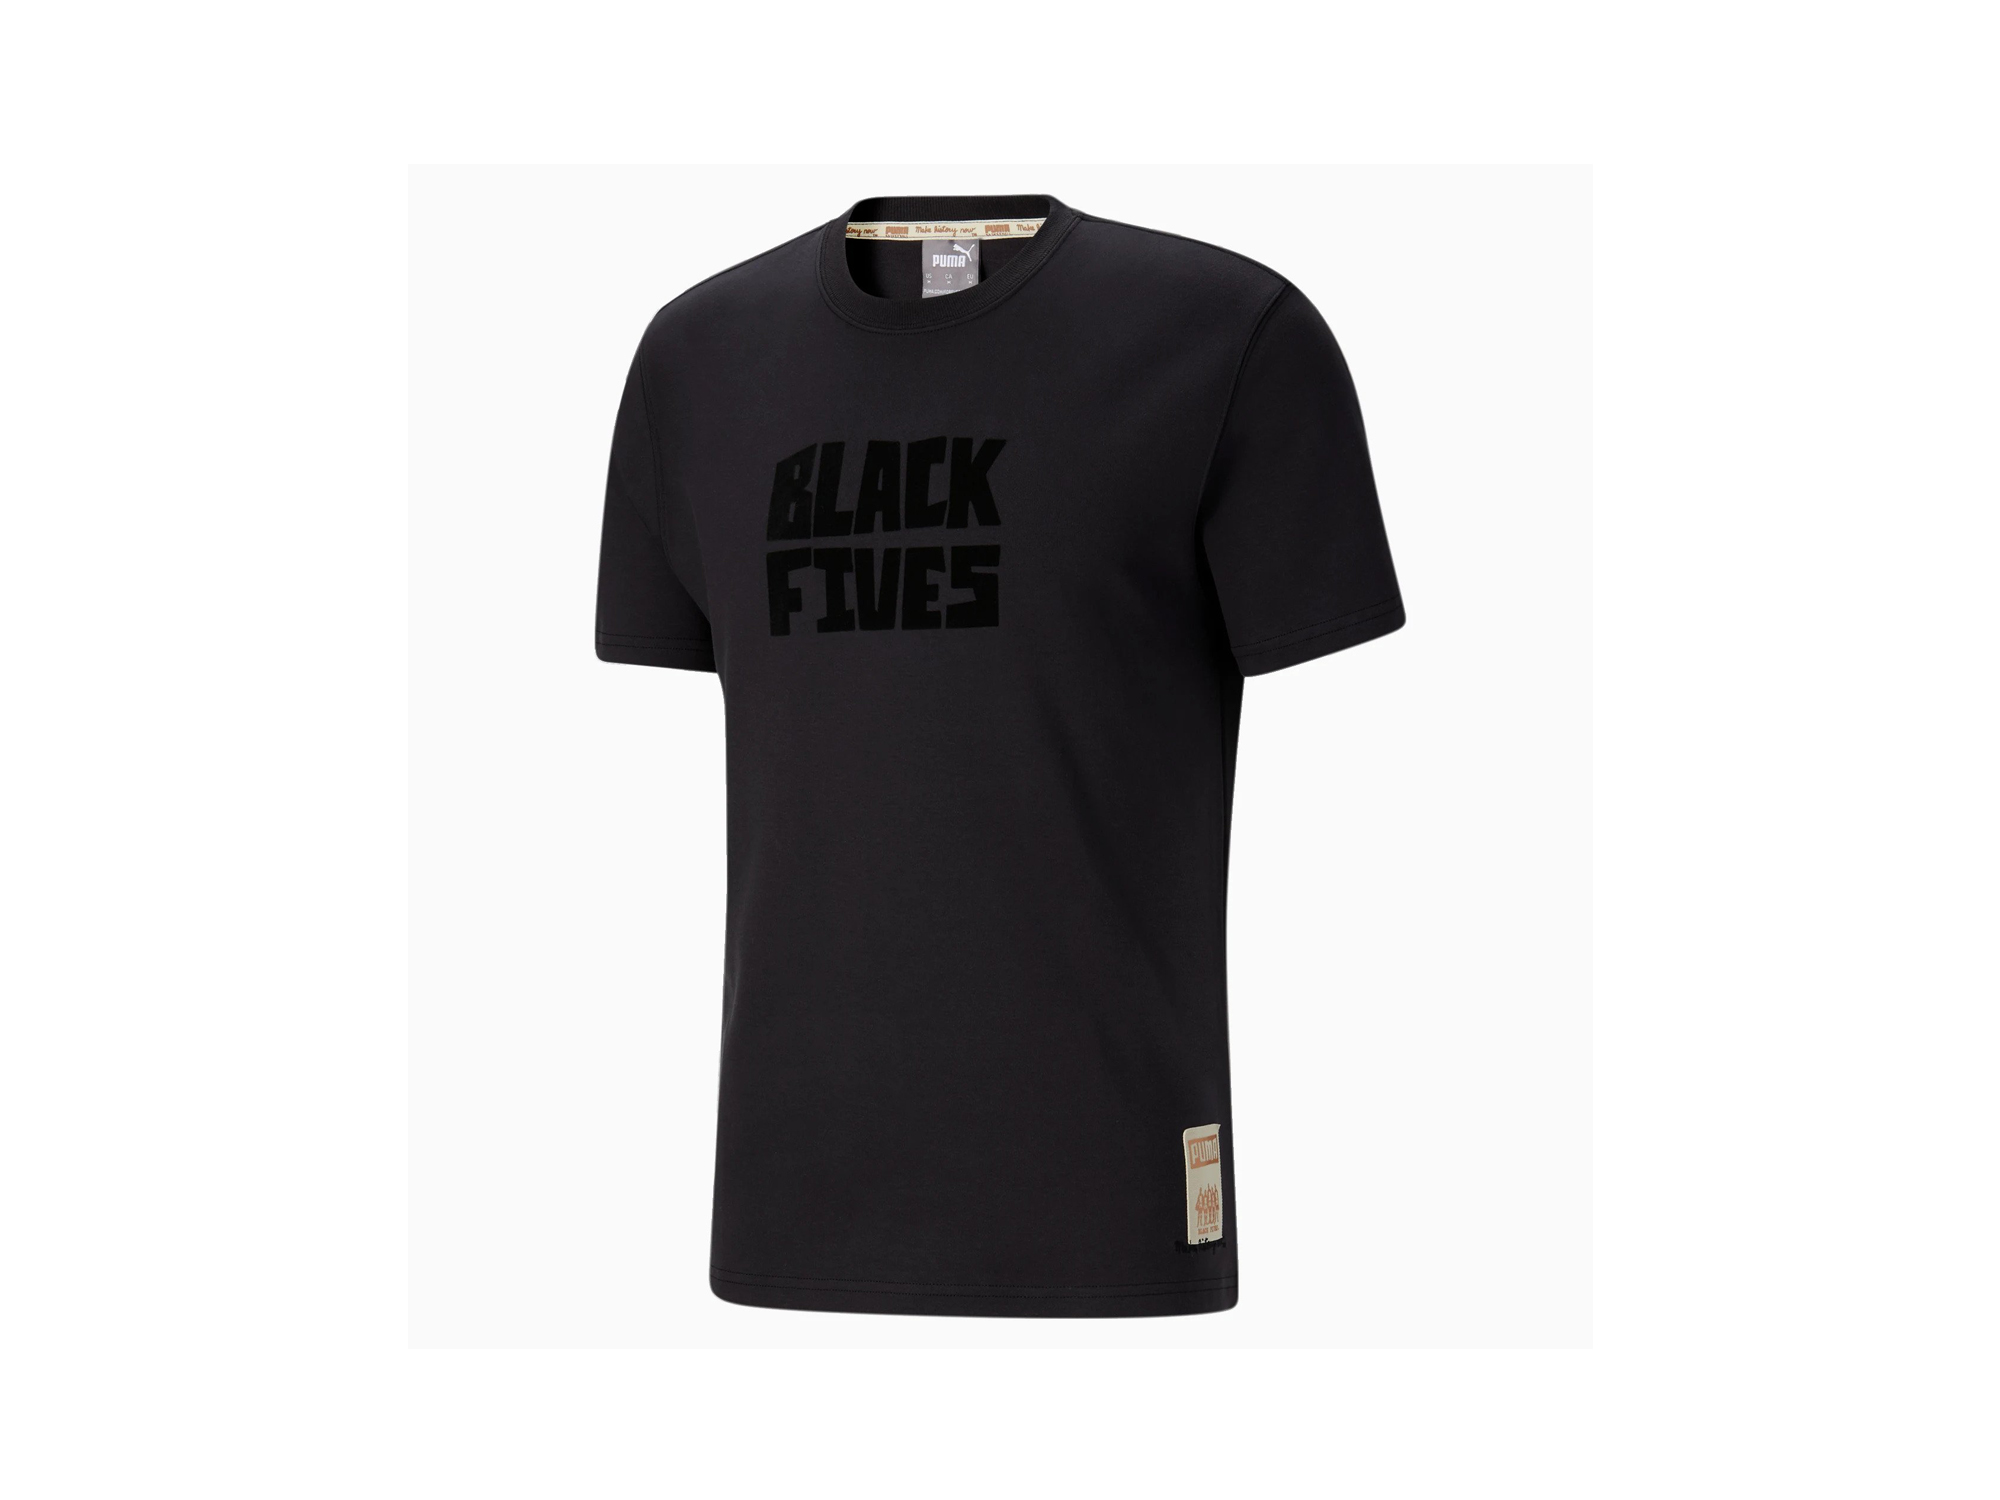 Puma Black Fives T-Shirt